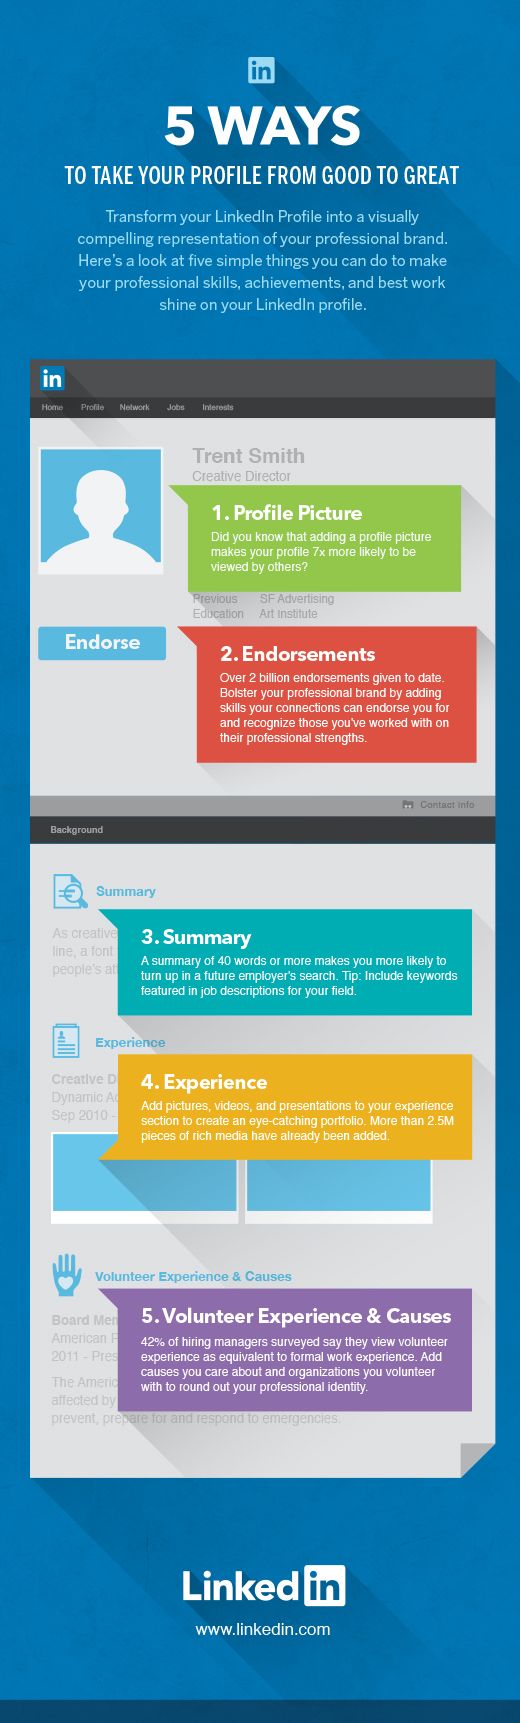 5 LinkedIn Profile Tips Infographic #LinkedIn